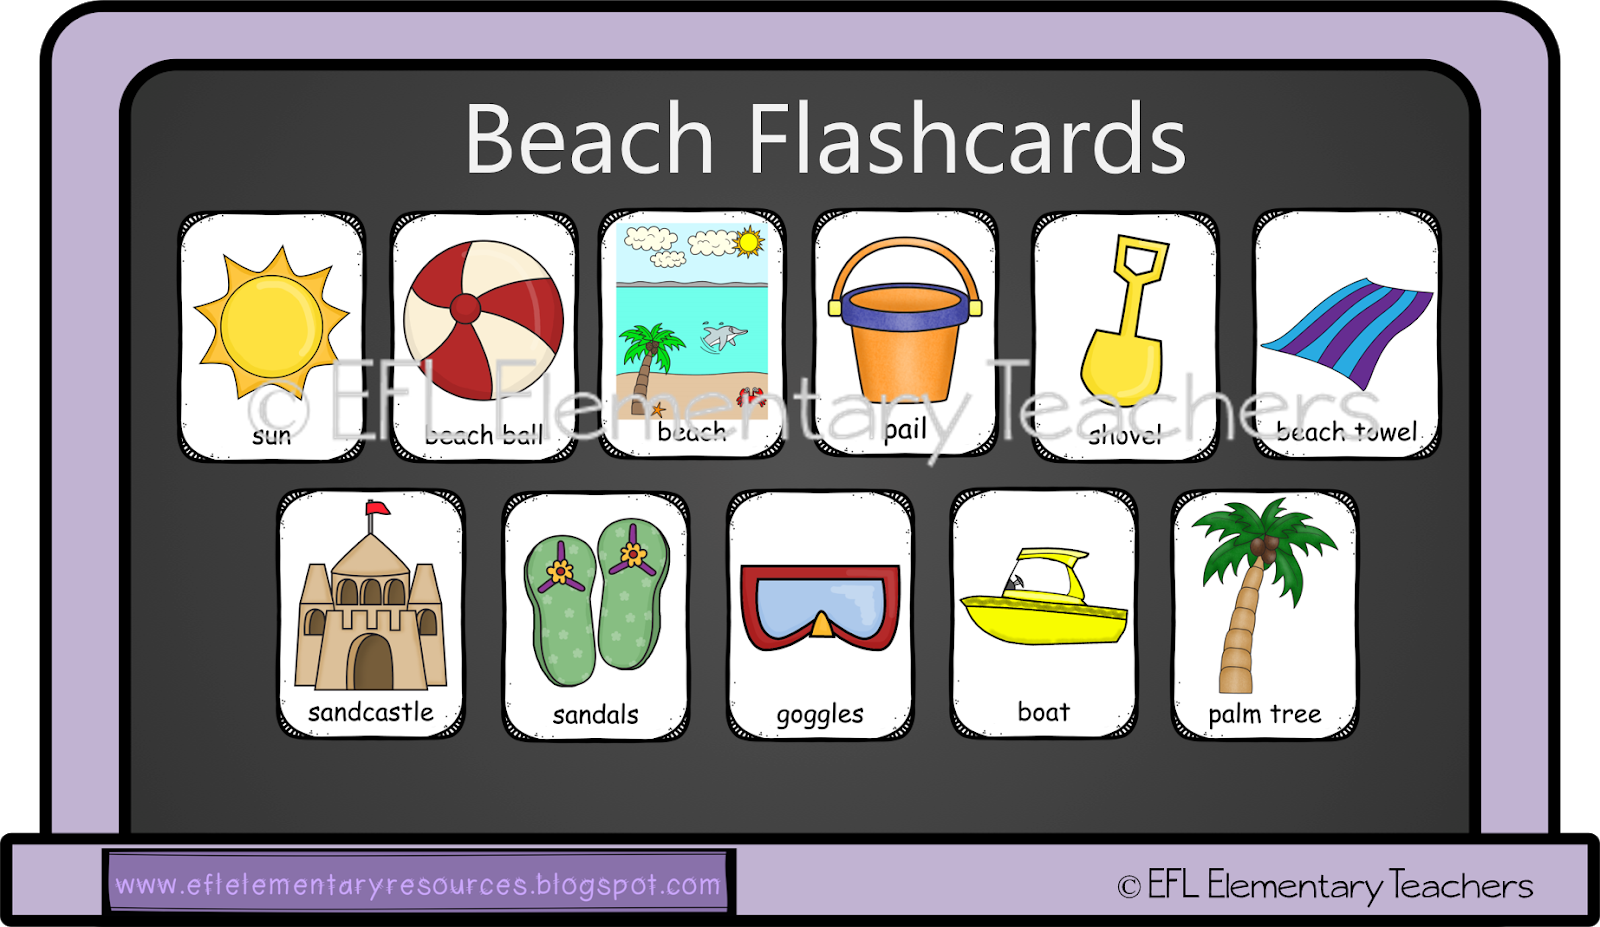 On the Beach Flashcards. Пляж на английском. Бич по английскому. Карточка на английском Beach. Пляж на английском языке